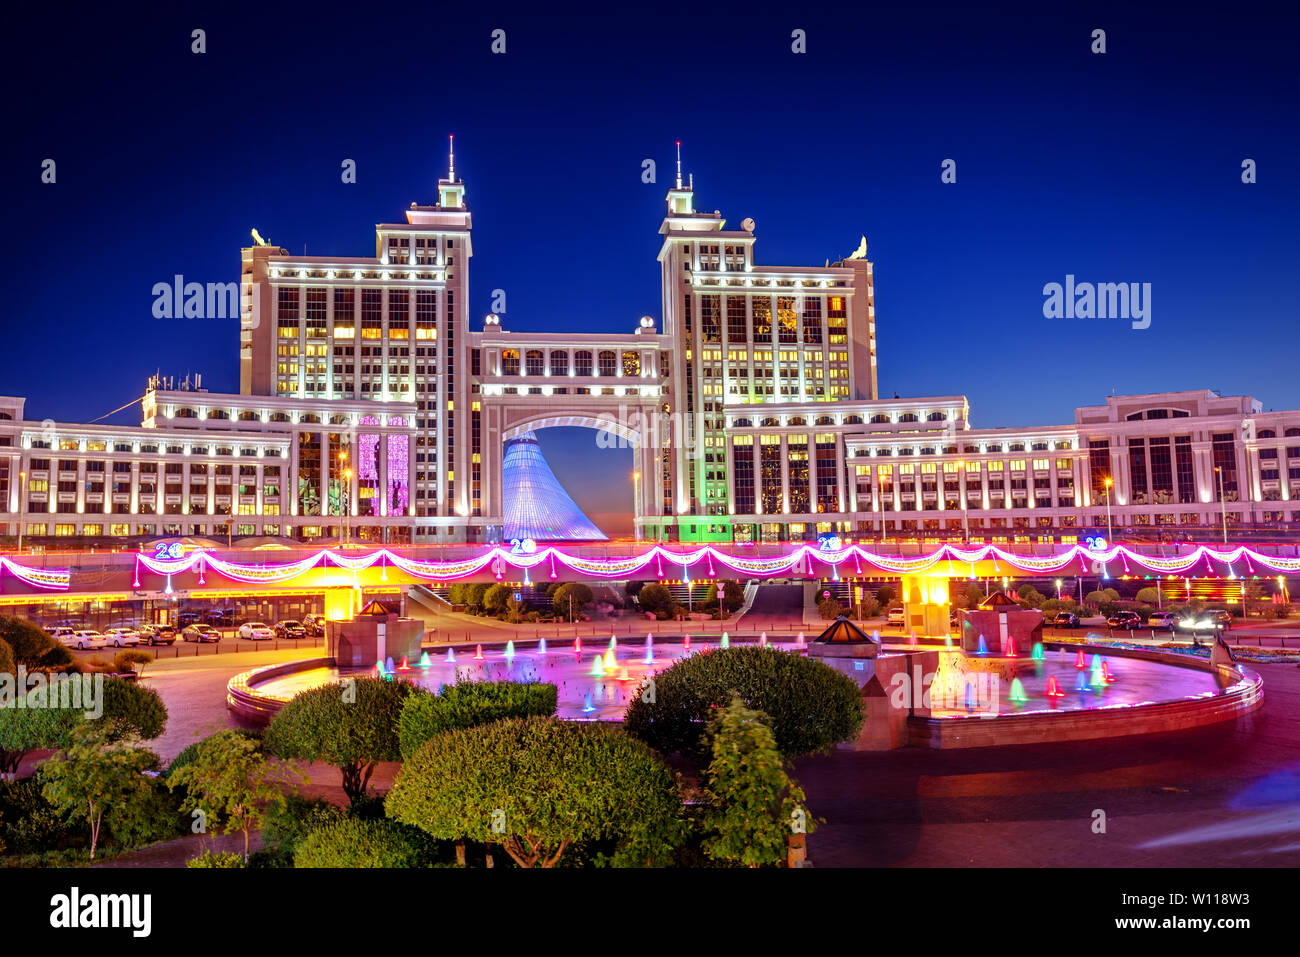 Astana, Kazakhstan, night view of the city illuminated to celebrate its 20th anniversary as capital of Kazakhstan Stock Photo